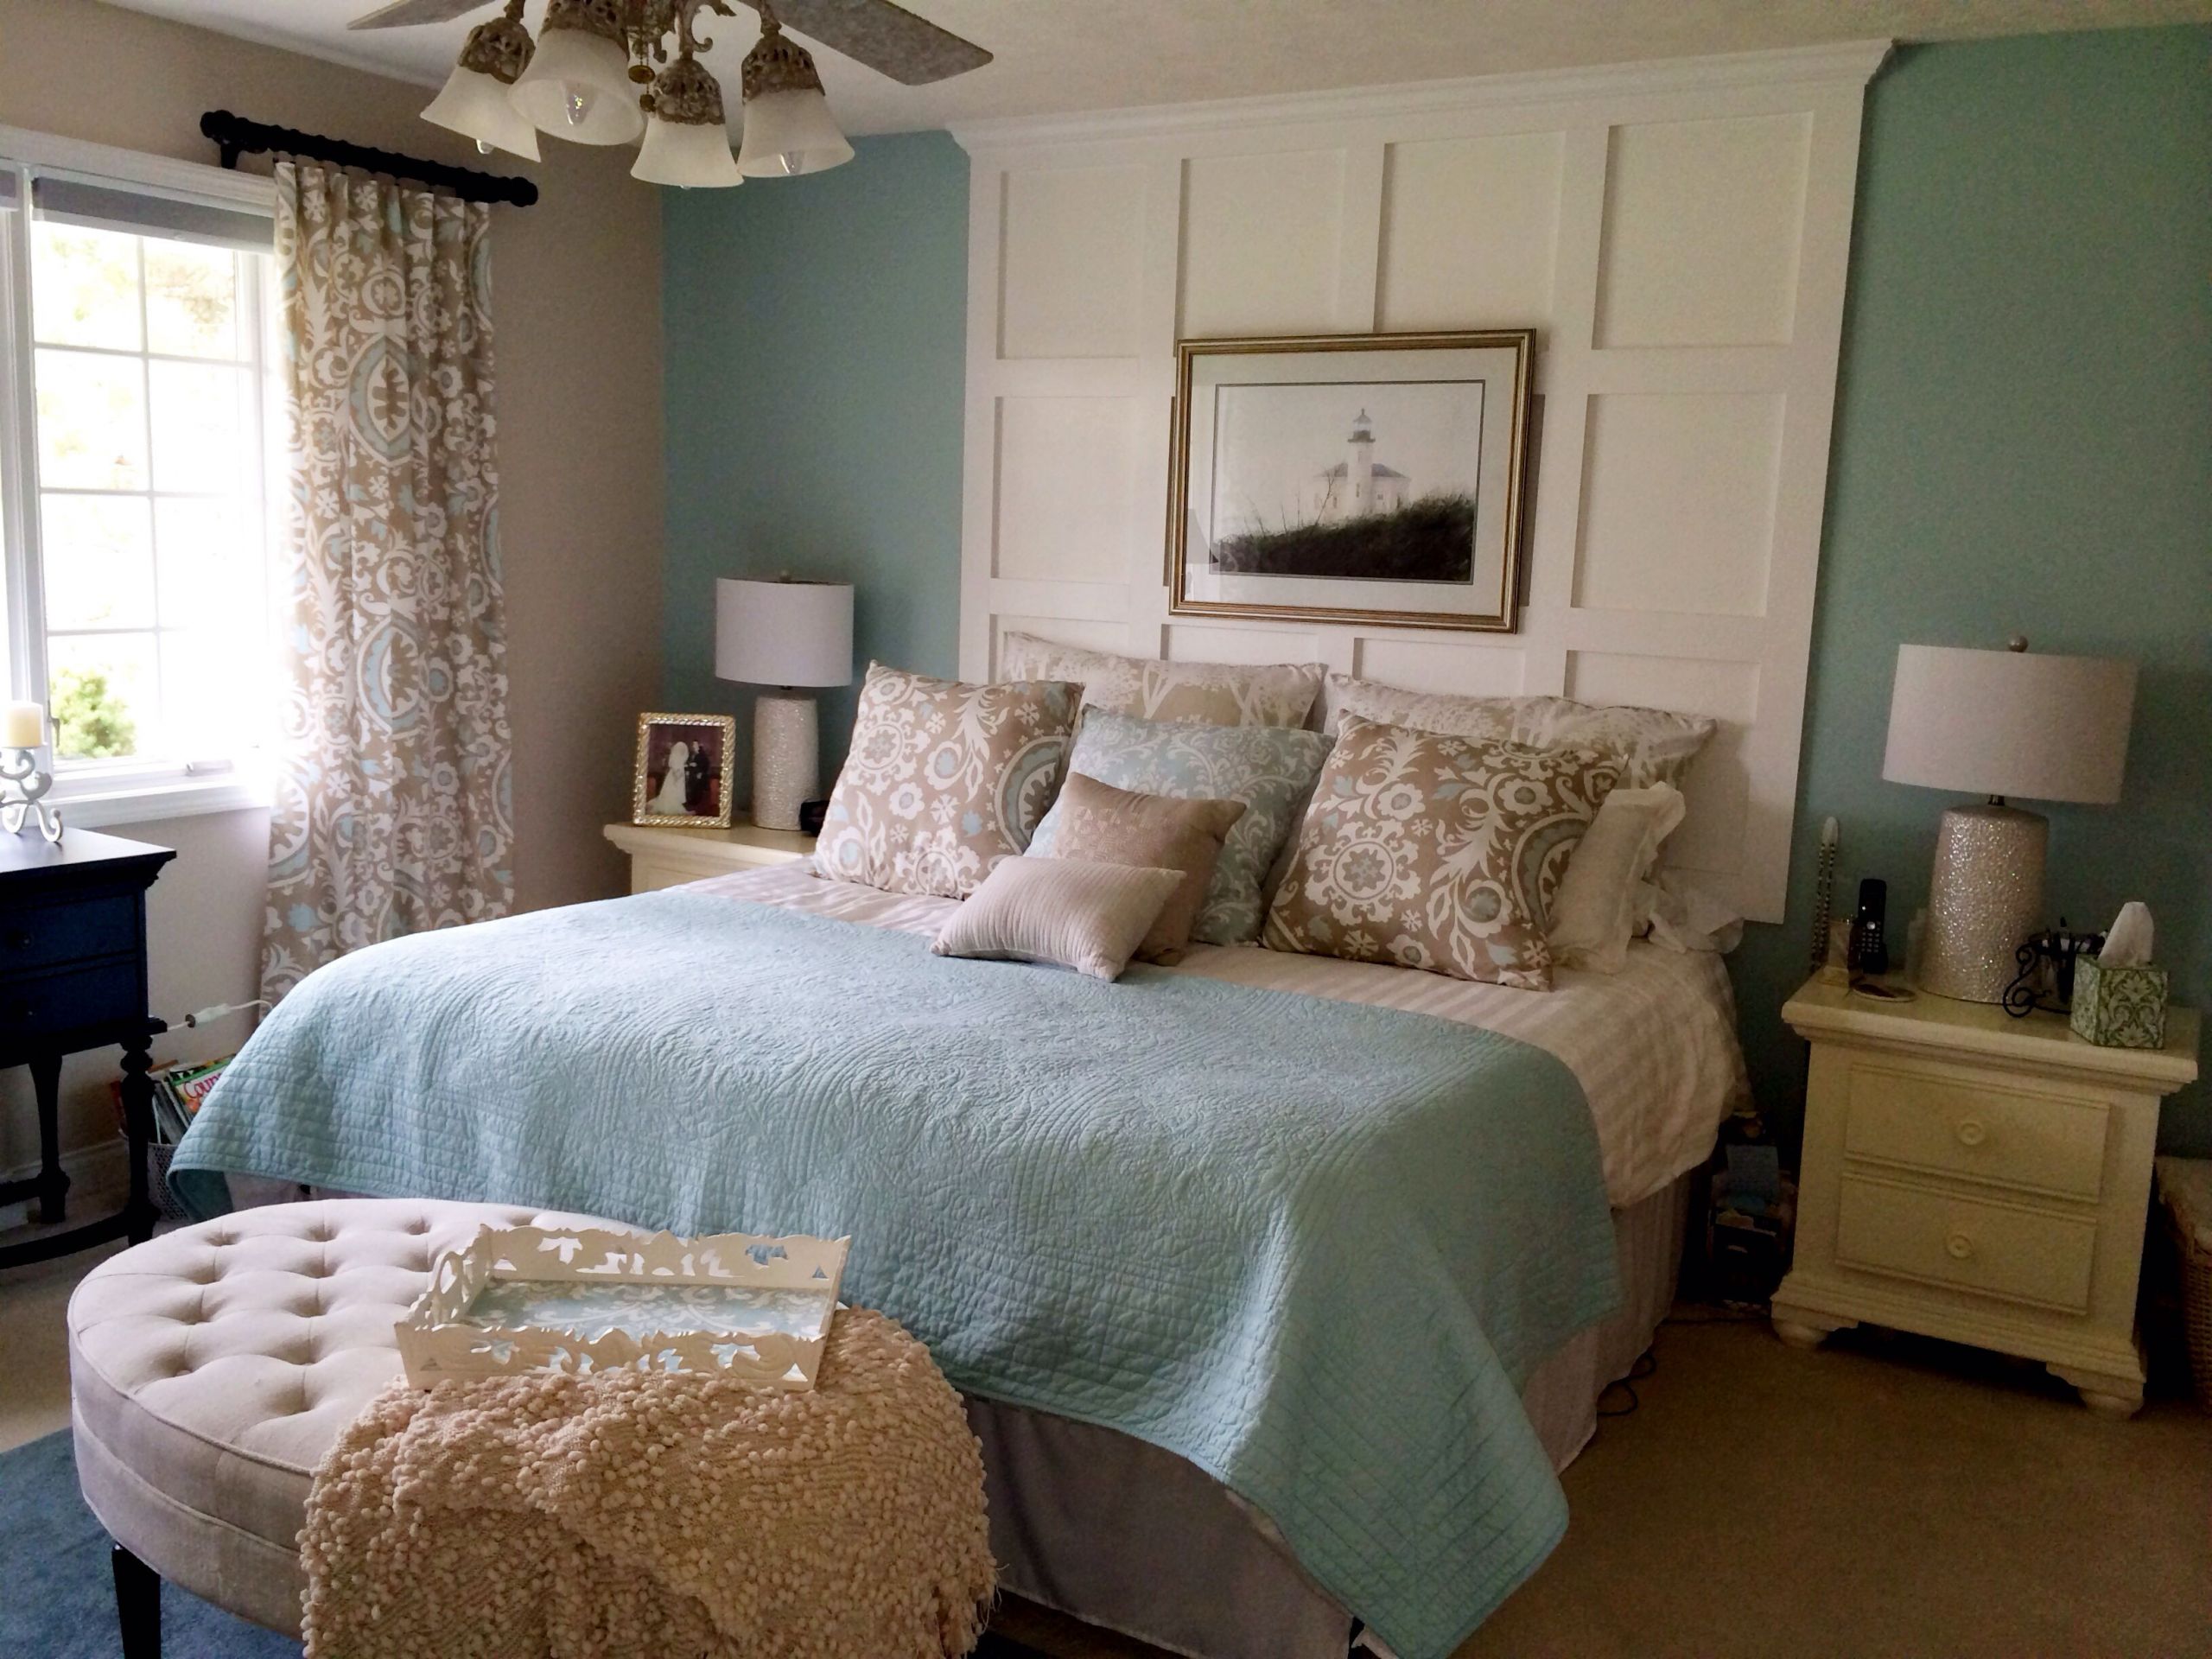 Pinterest Bedroom Colors
 The 25 best Relaxing bedroom colors ideas on Pinterest